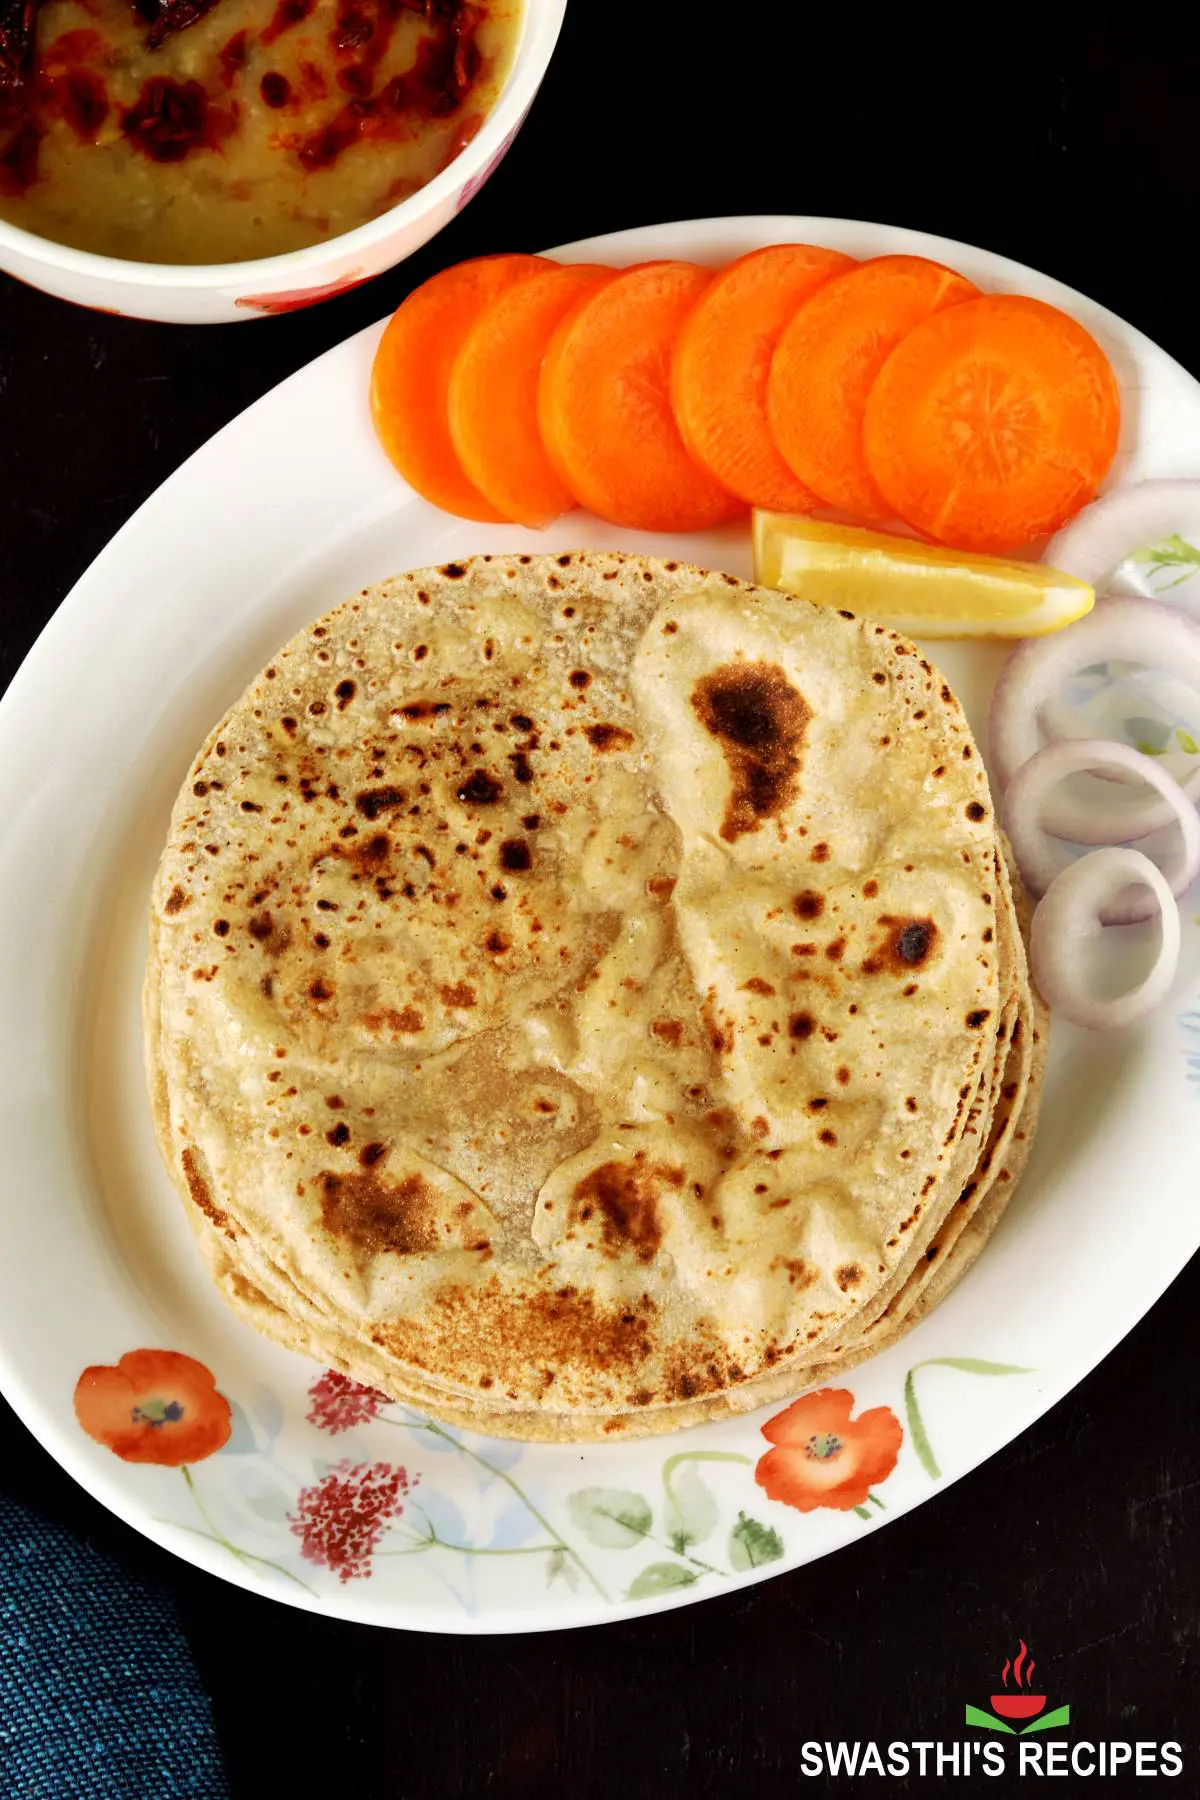 Chapati Recipe (Indian Flatbread) - Swasthi's Recipes